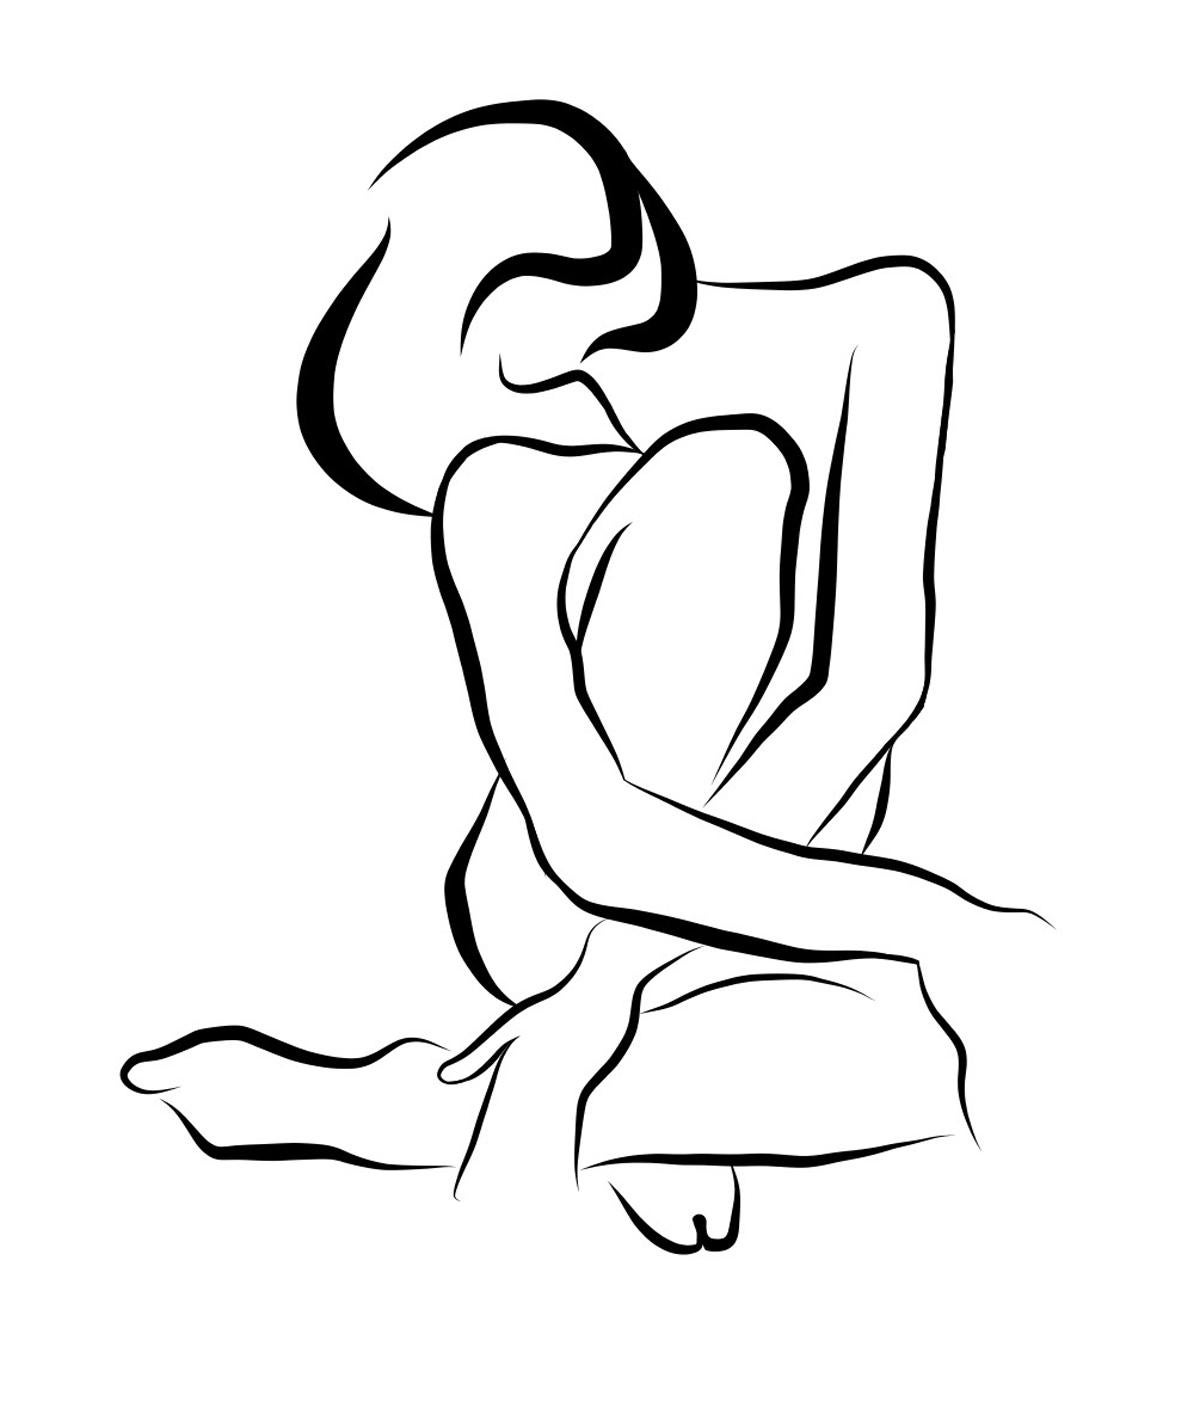 Michael Binkley Nude Print - Haiku #19, 2/50 - Digital Vector Drawing B&W Seated Female Nude Woman Figure